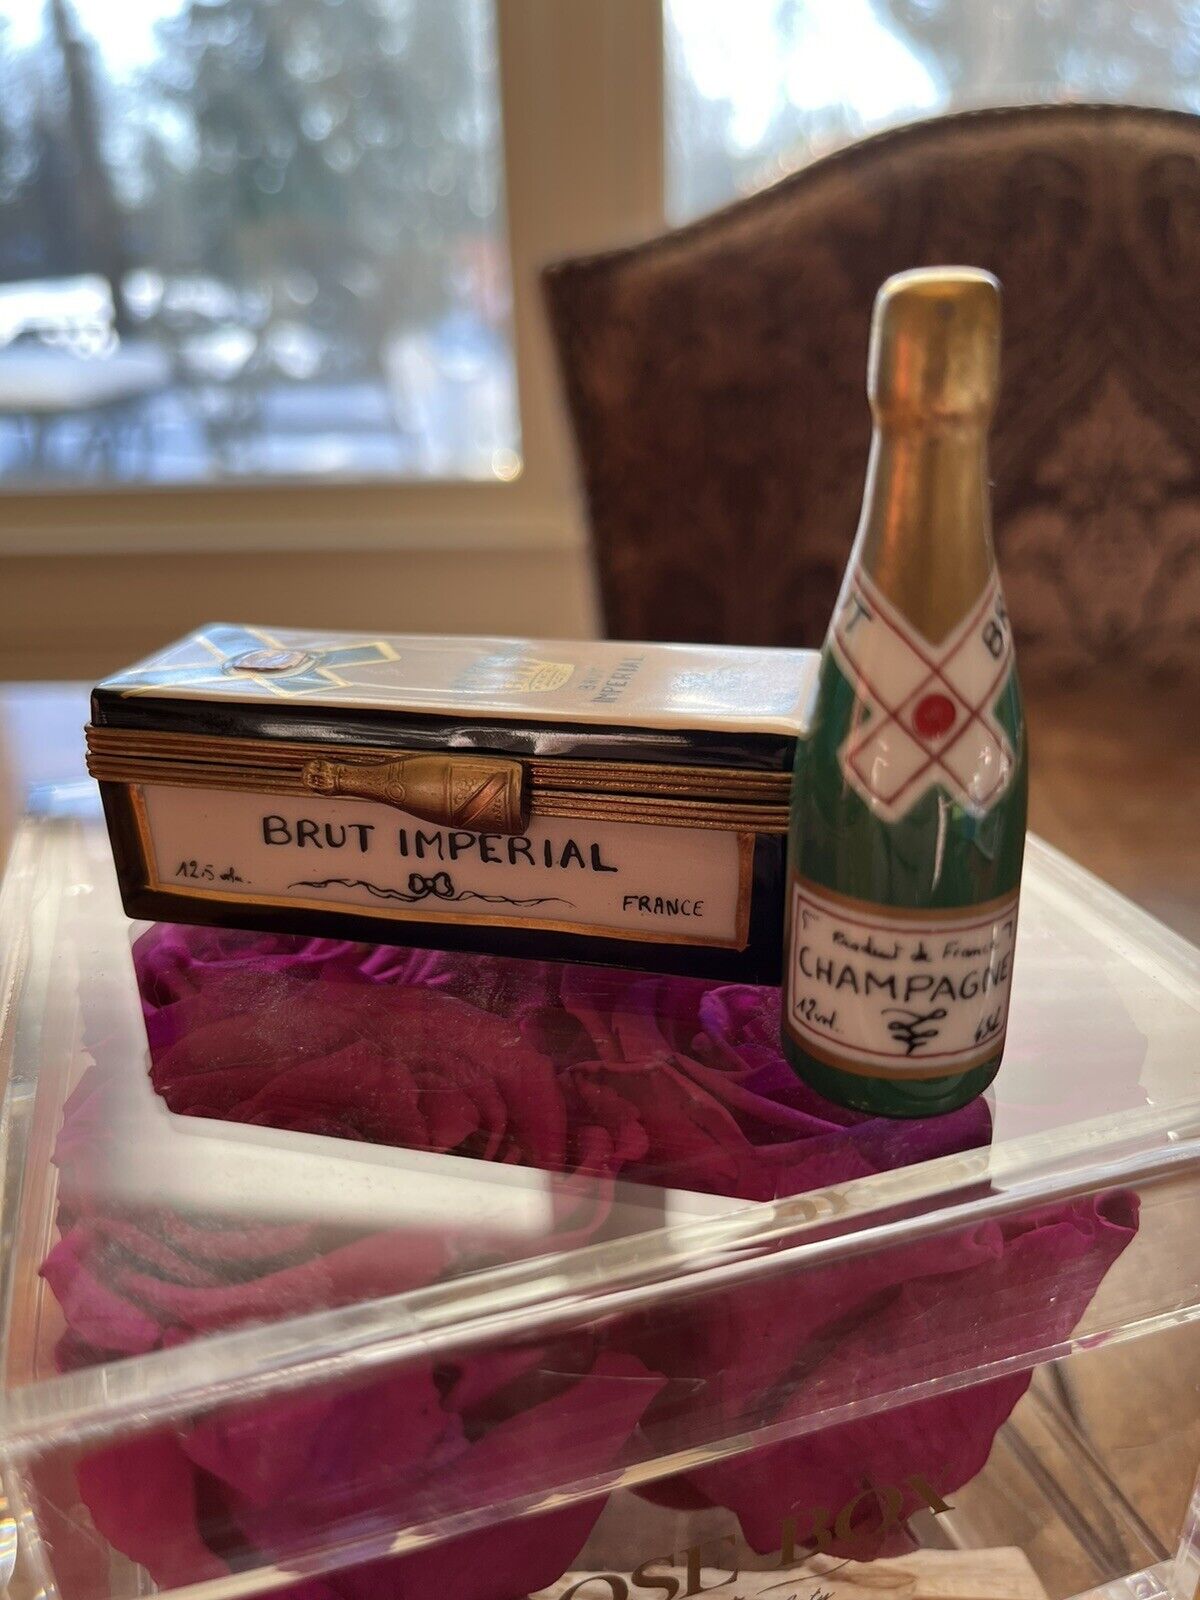 Limoges Brut Imperial Champagne Bottle and Box Set